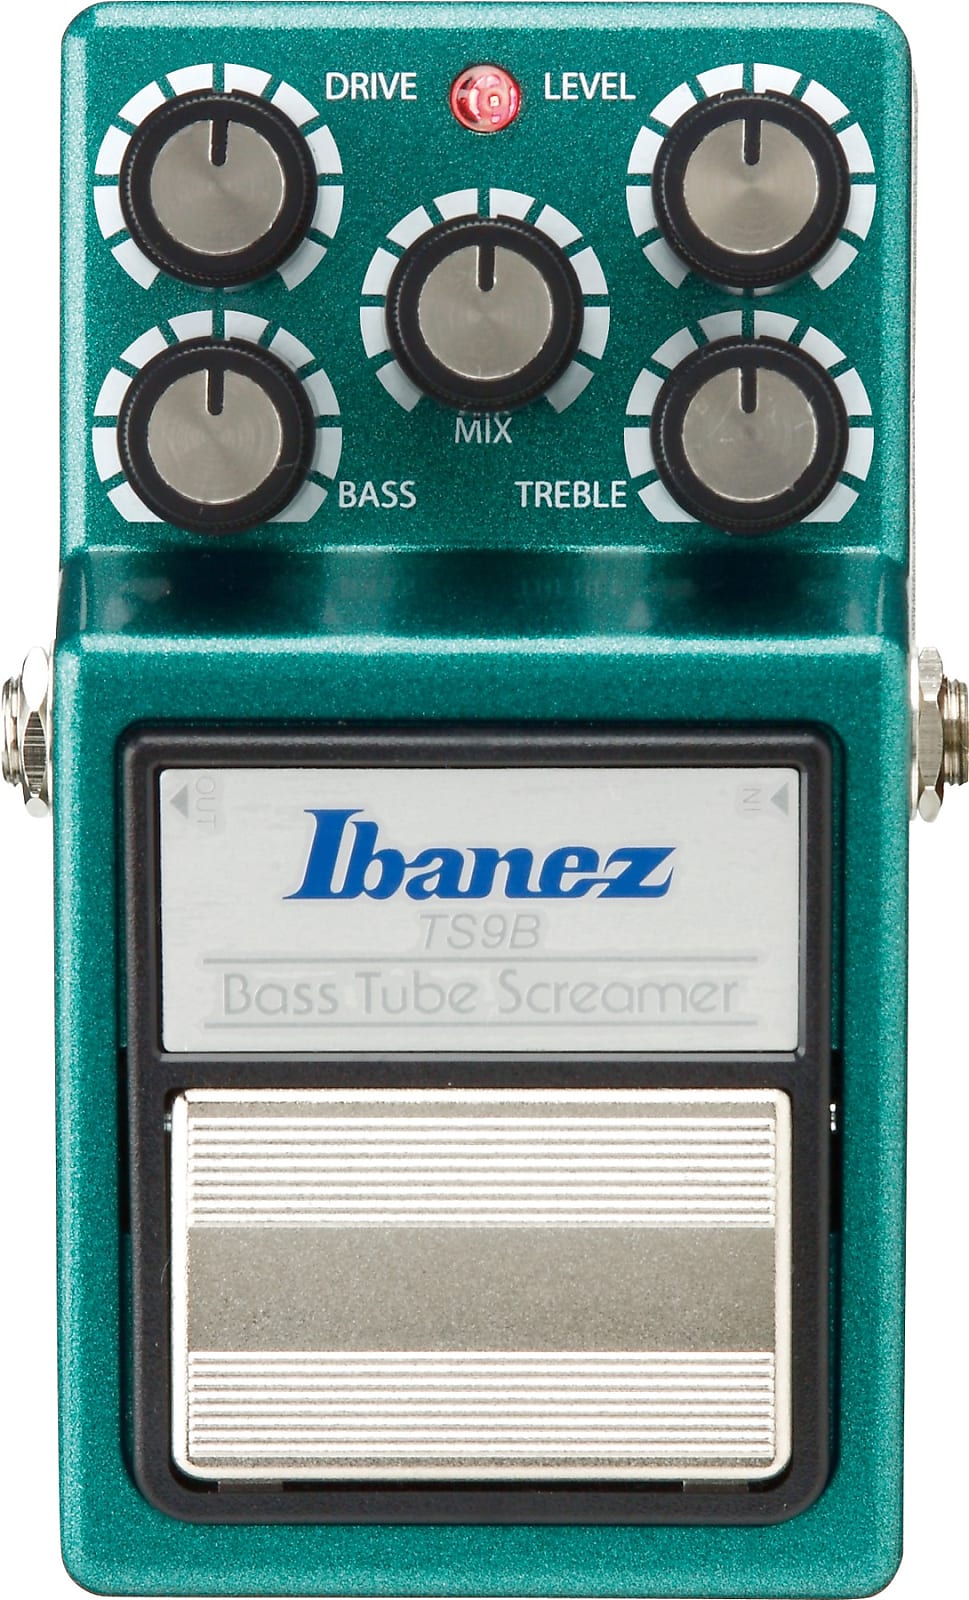 Ibanez TS9B Tube Screamer Bass Overdrive Green on OhGuitar.com